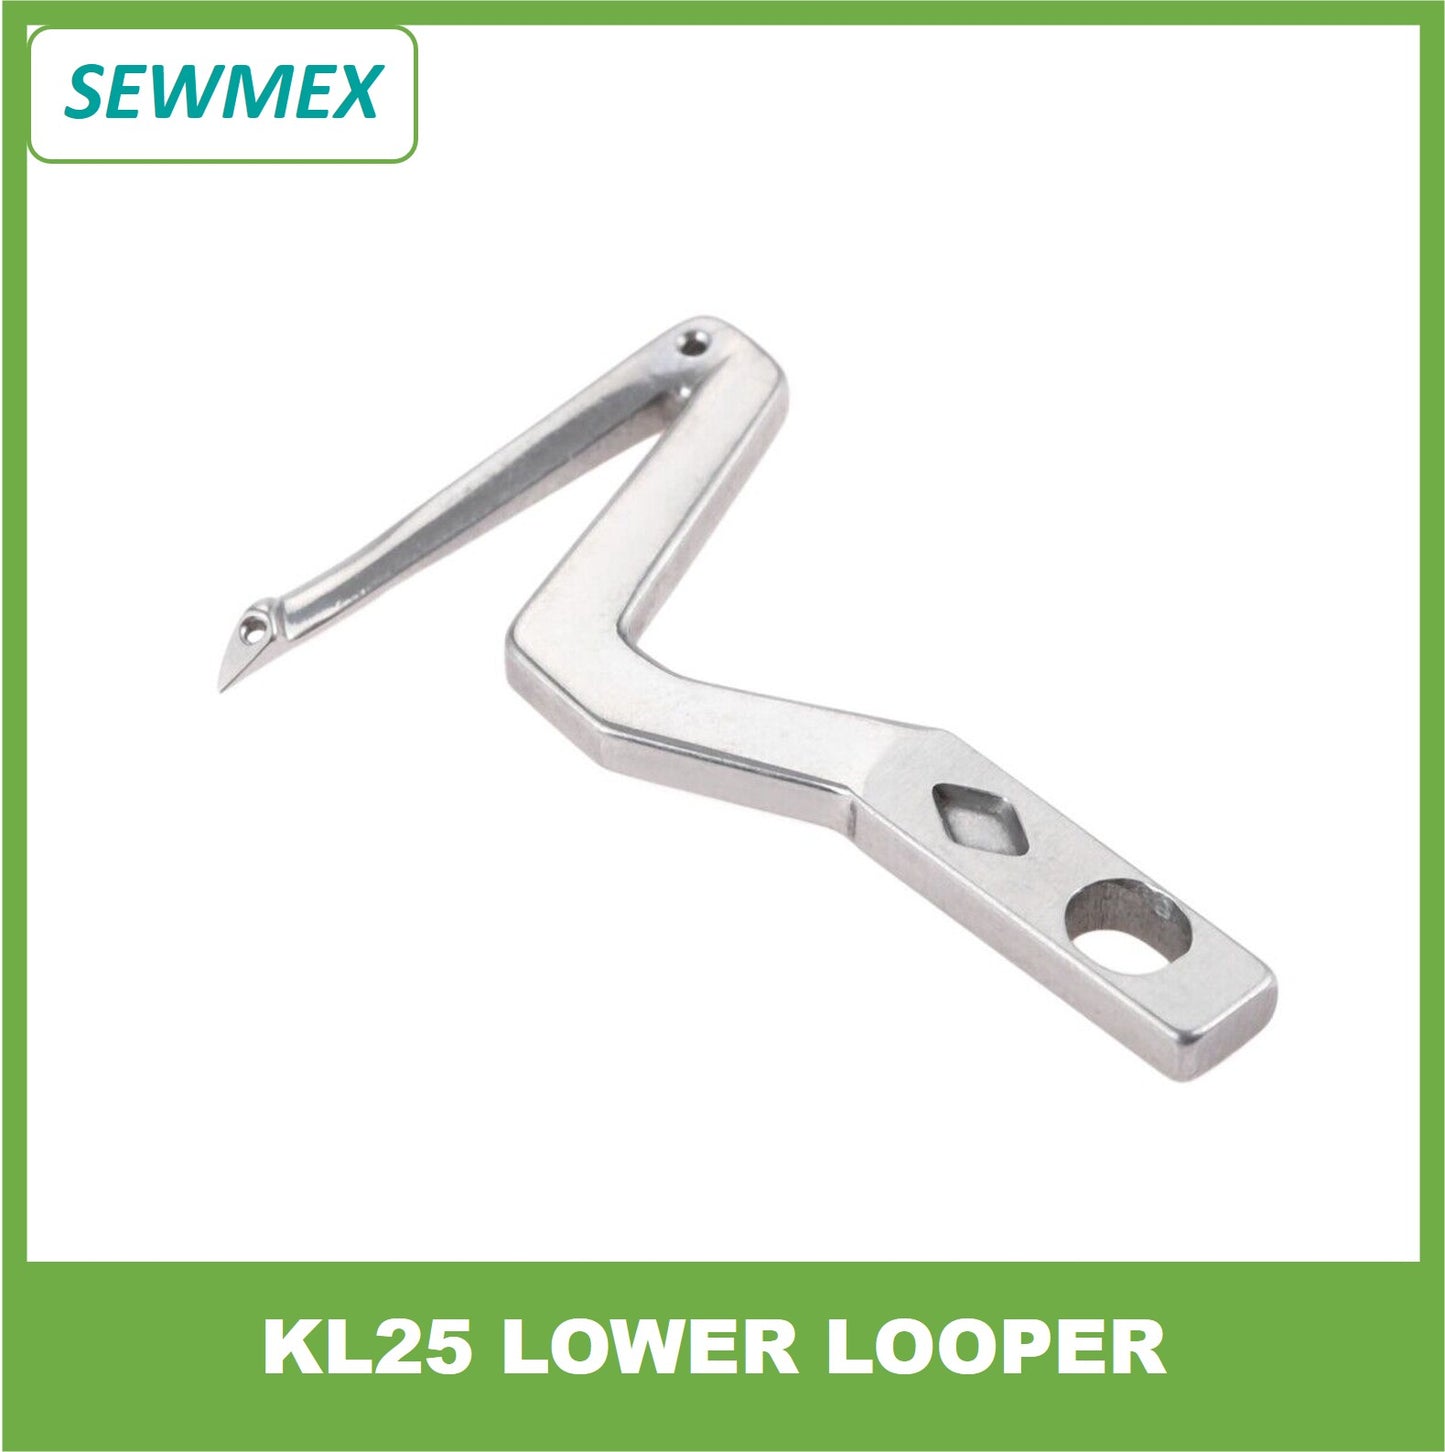 KL25 Lower Looper